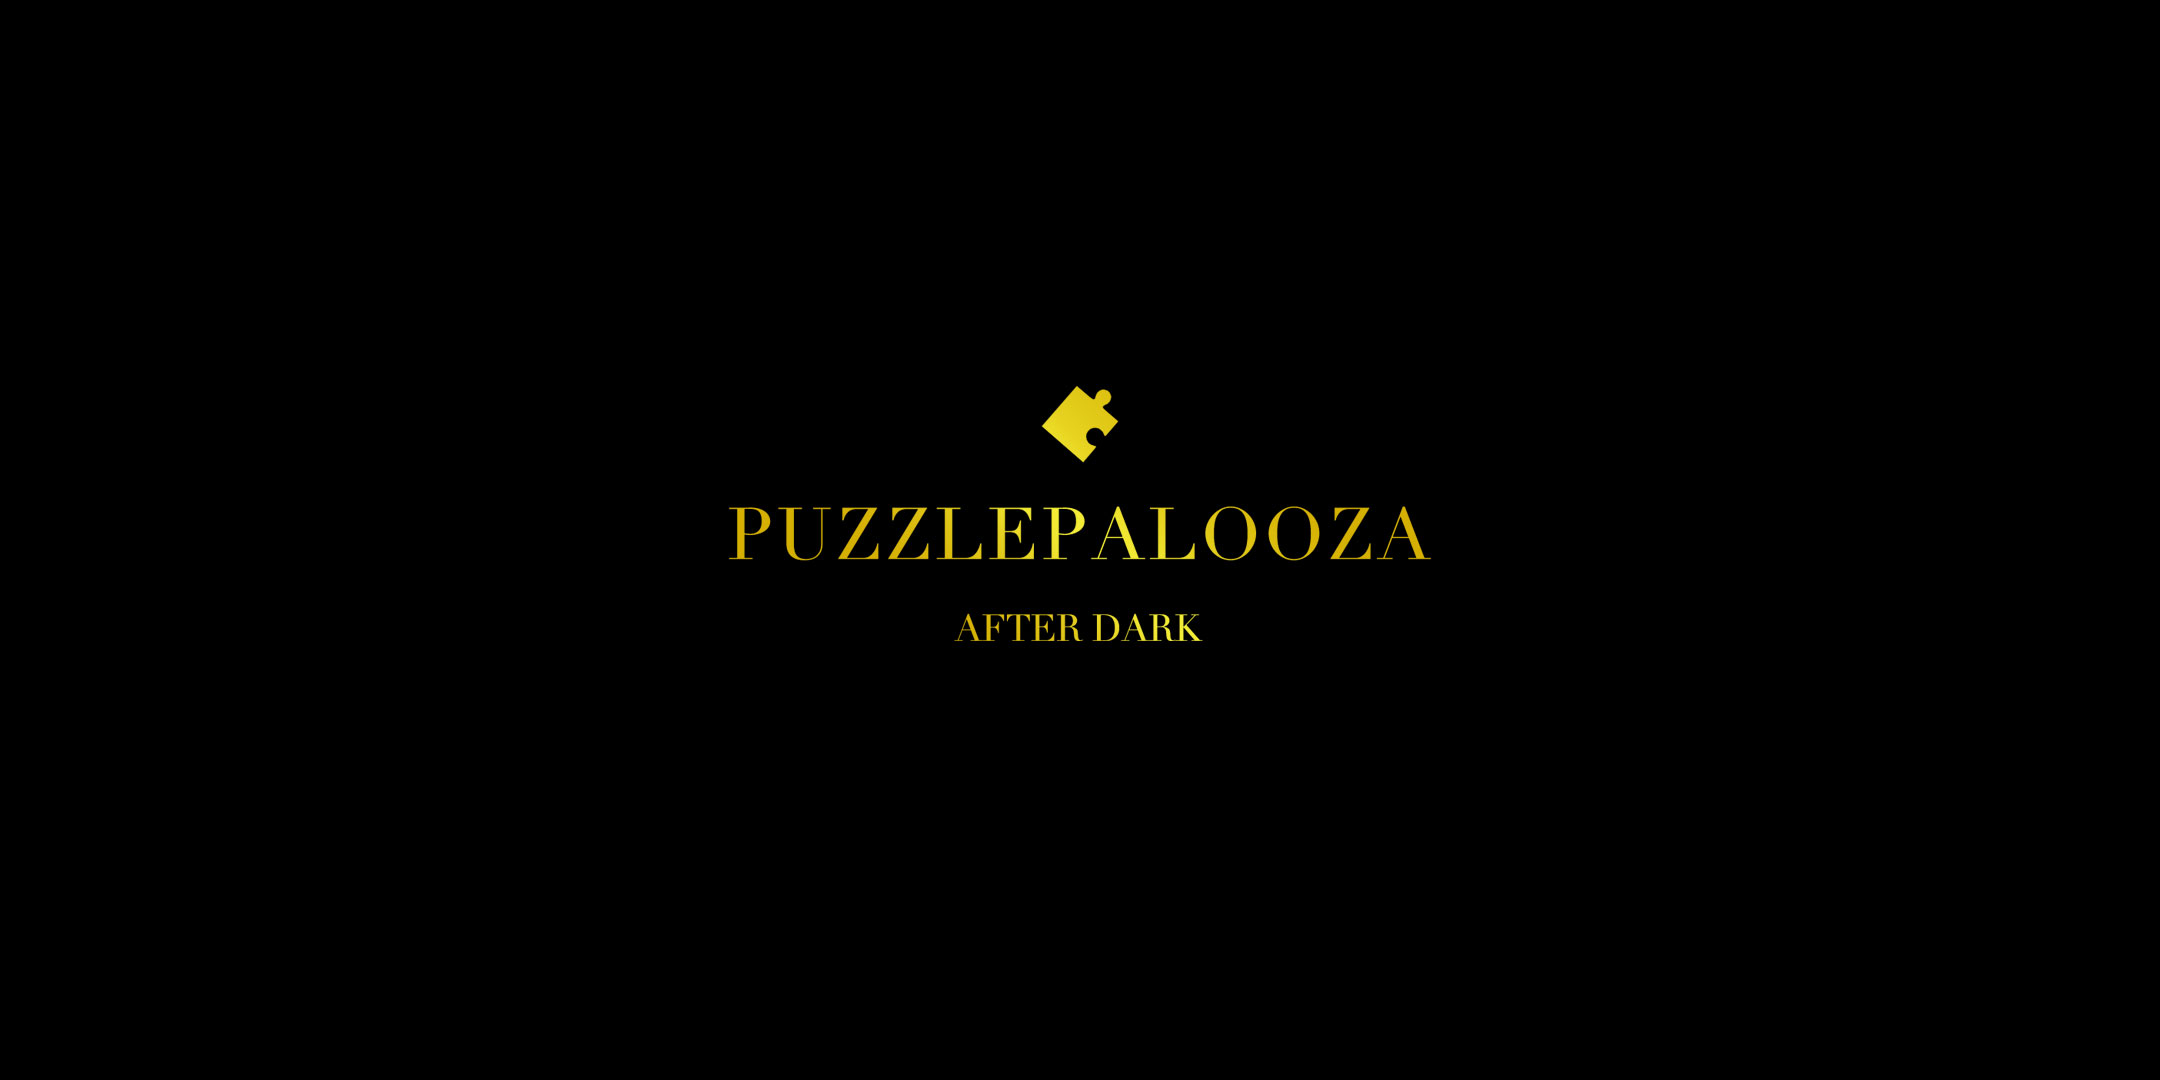 Puzzlepalooza After Dark April Fools Image